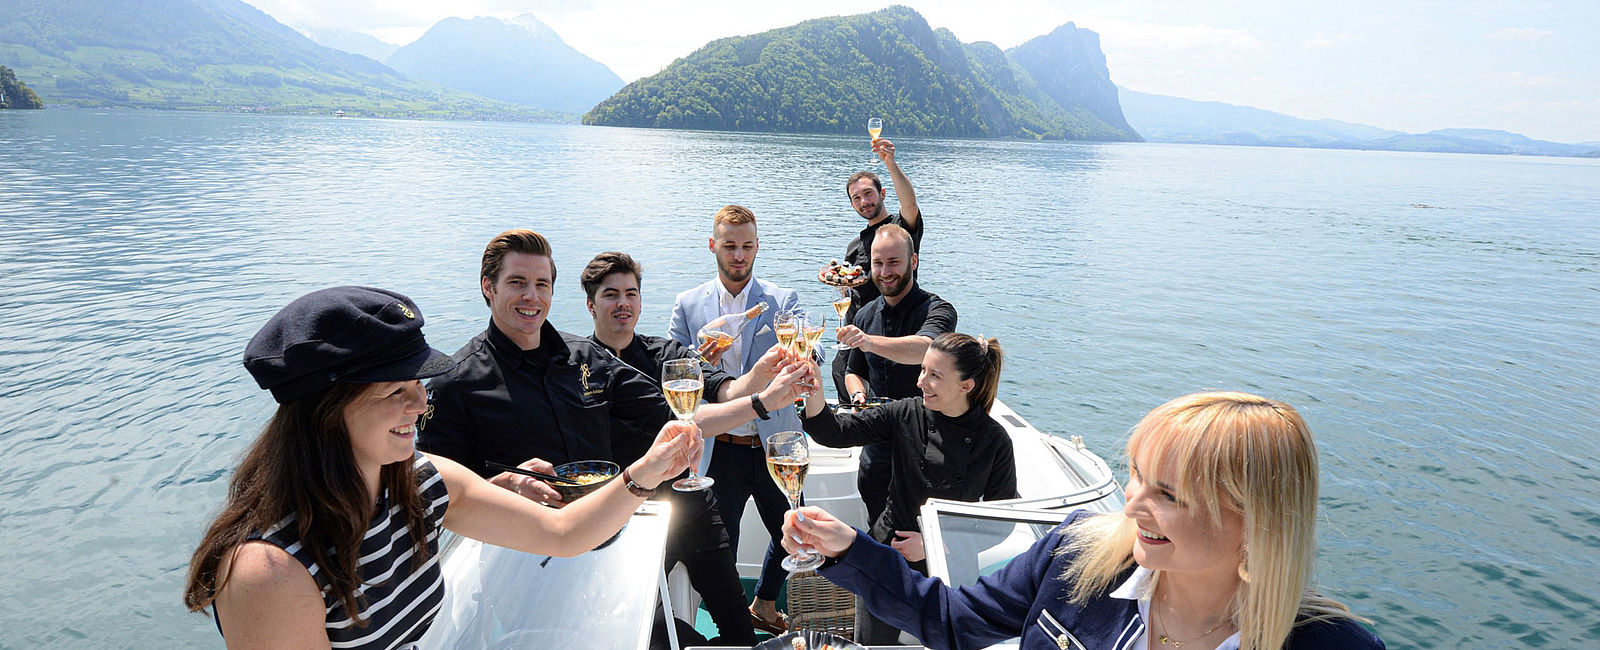 NEWS
 Vitznauerhof launched den ersten Fine Dining Boat Drive-in Europas 
